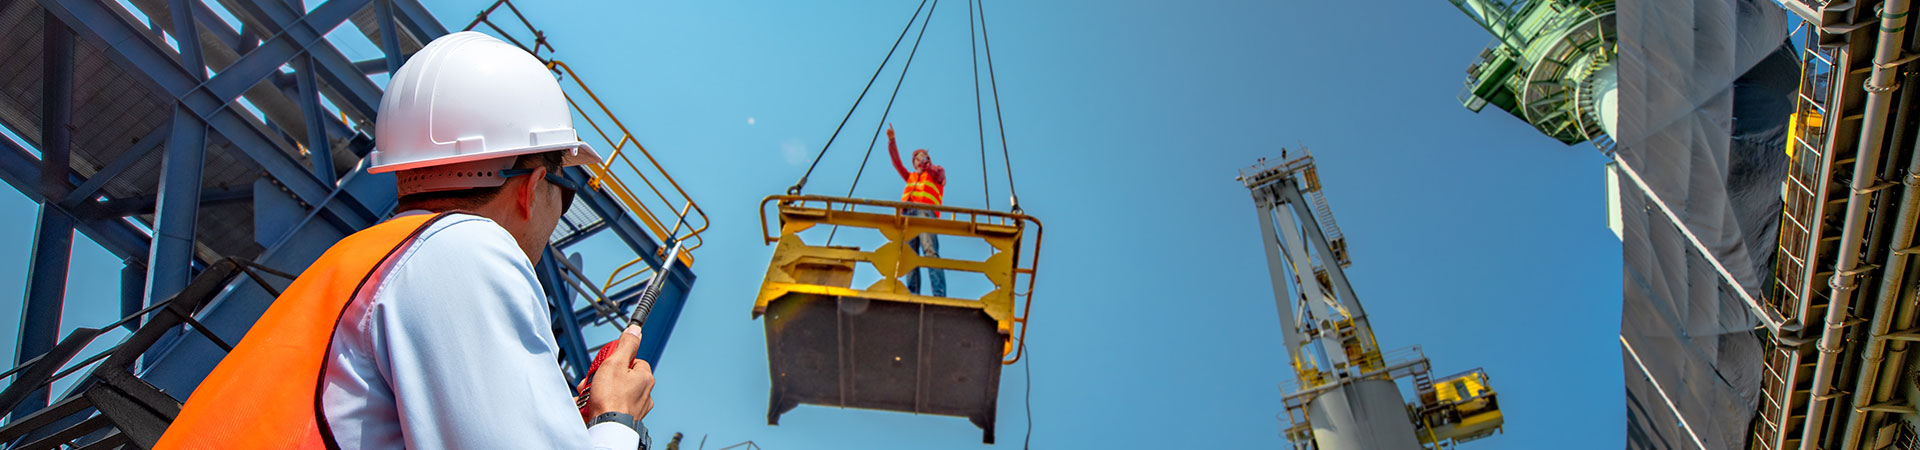 crane safety procedures